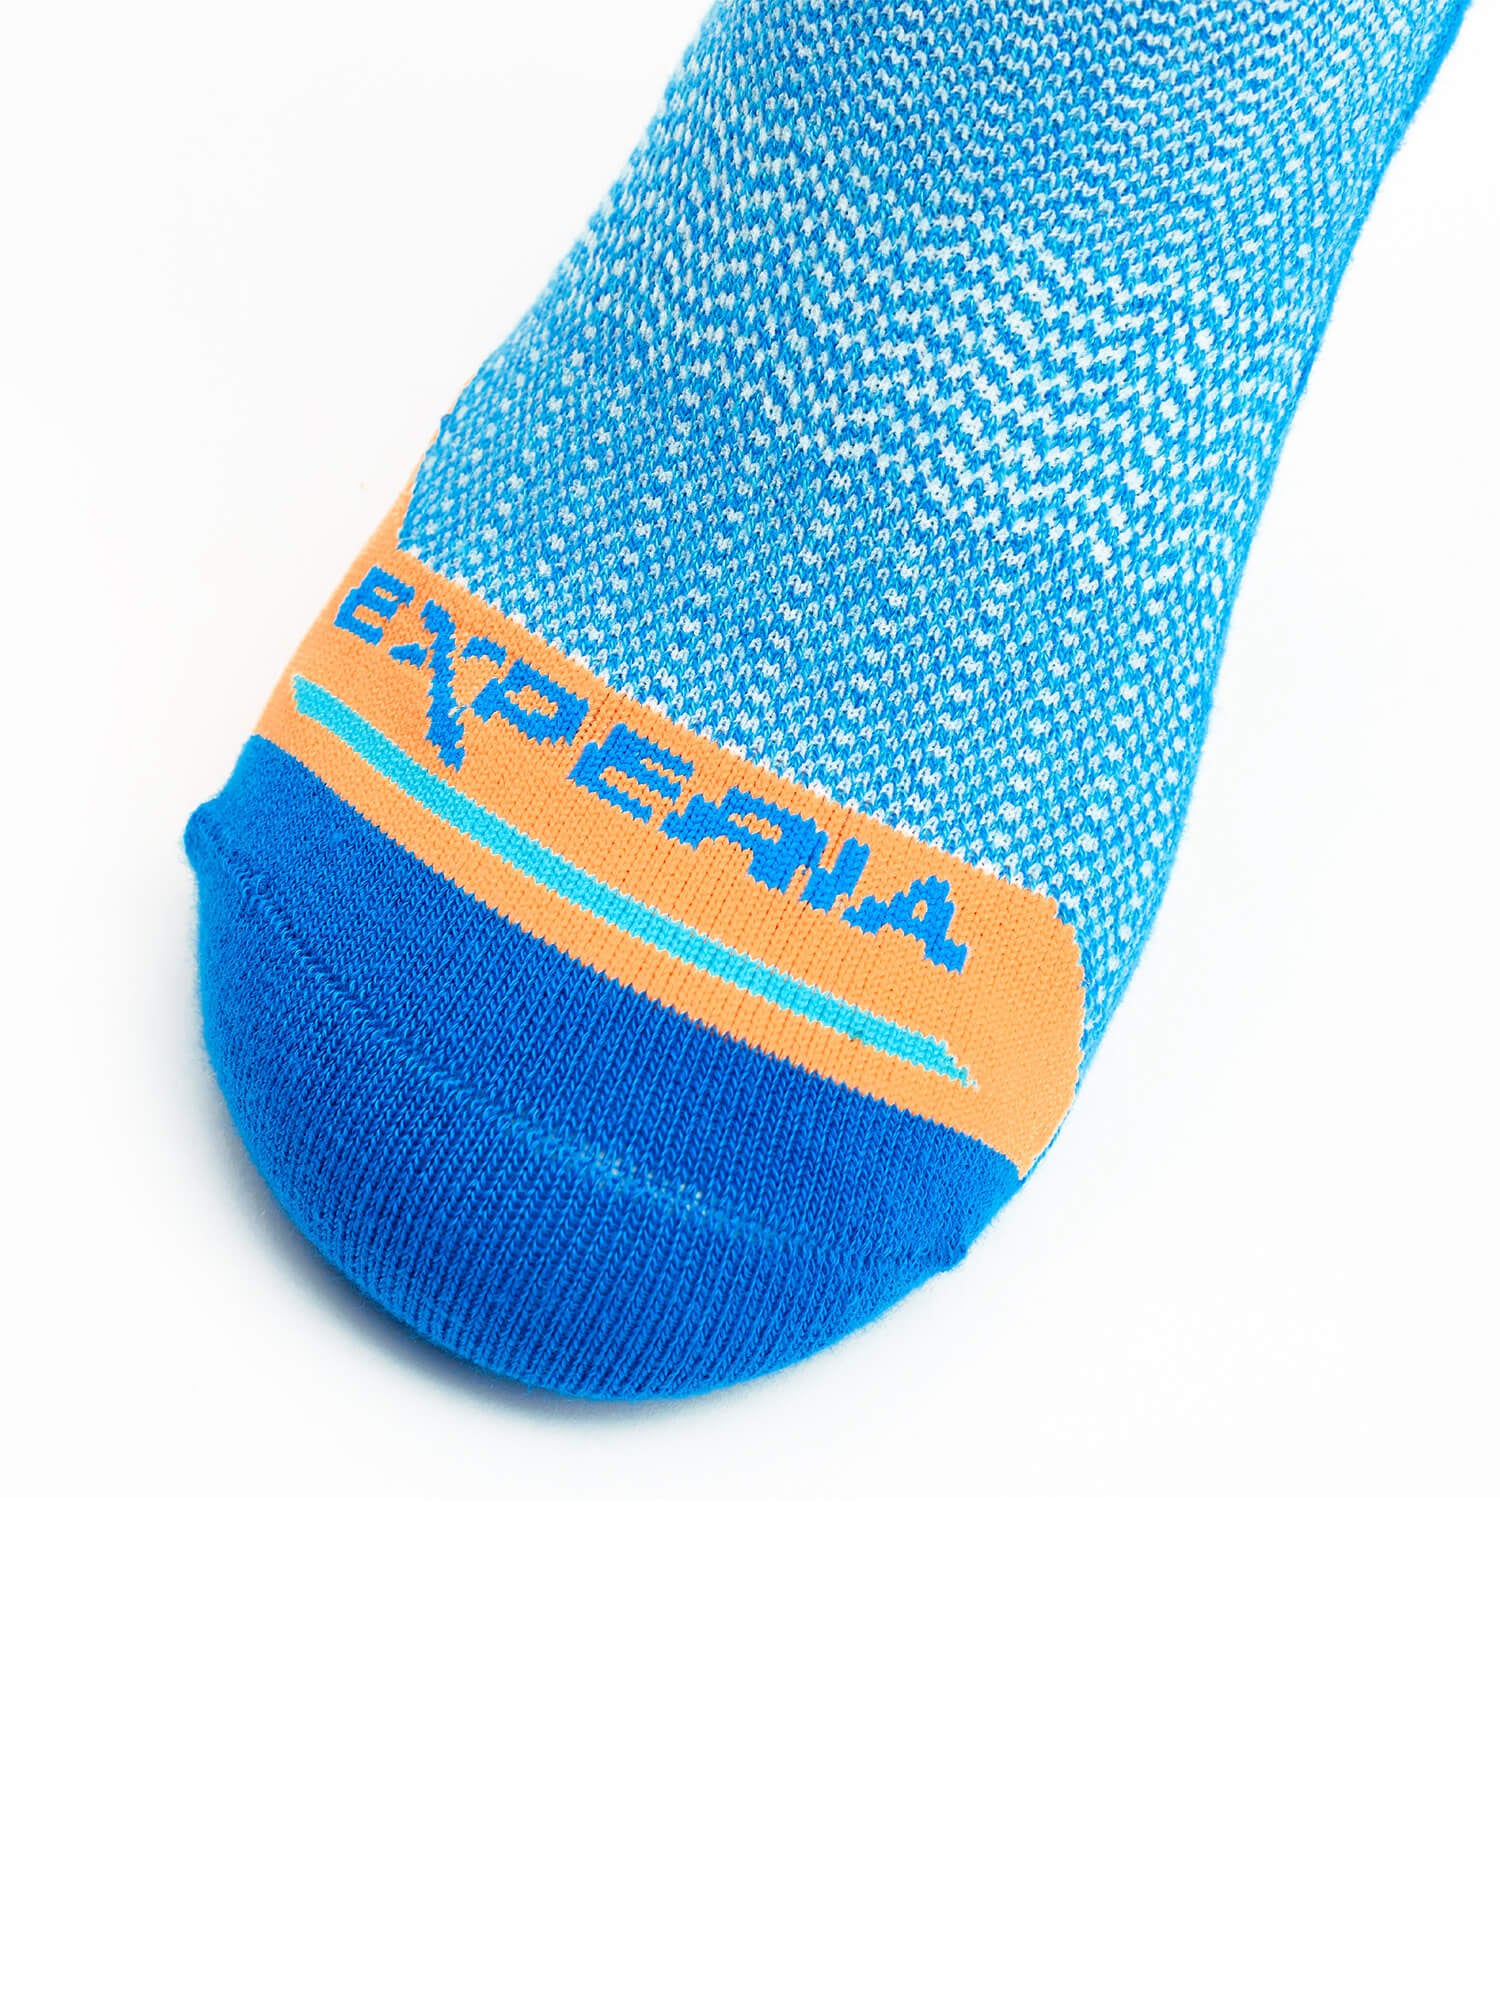 Toe of Thorlos Experia Repreve No Show Liner Socks in Blue